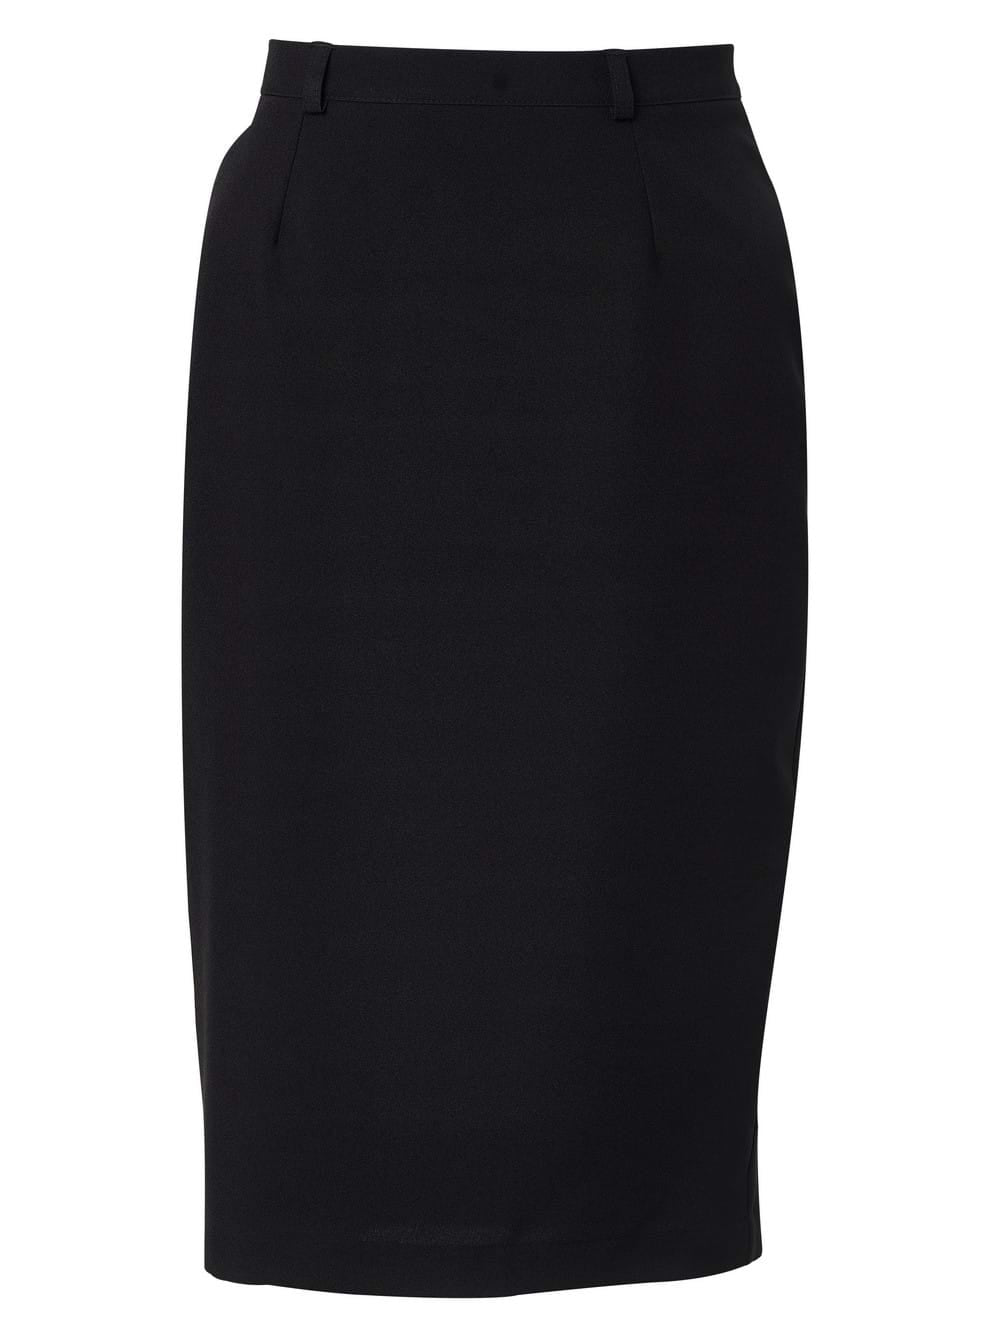 Ladies Verity Pencil Skirt - Fabric 869 Black | Creative Brands Africa